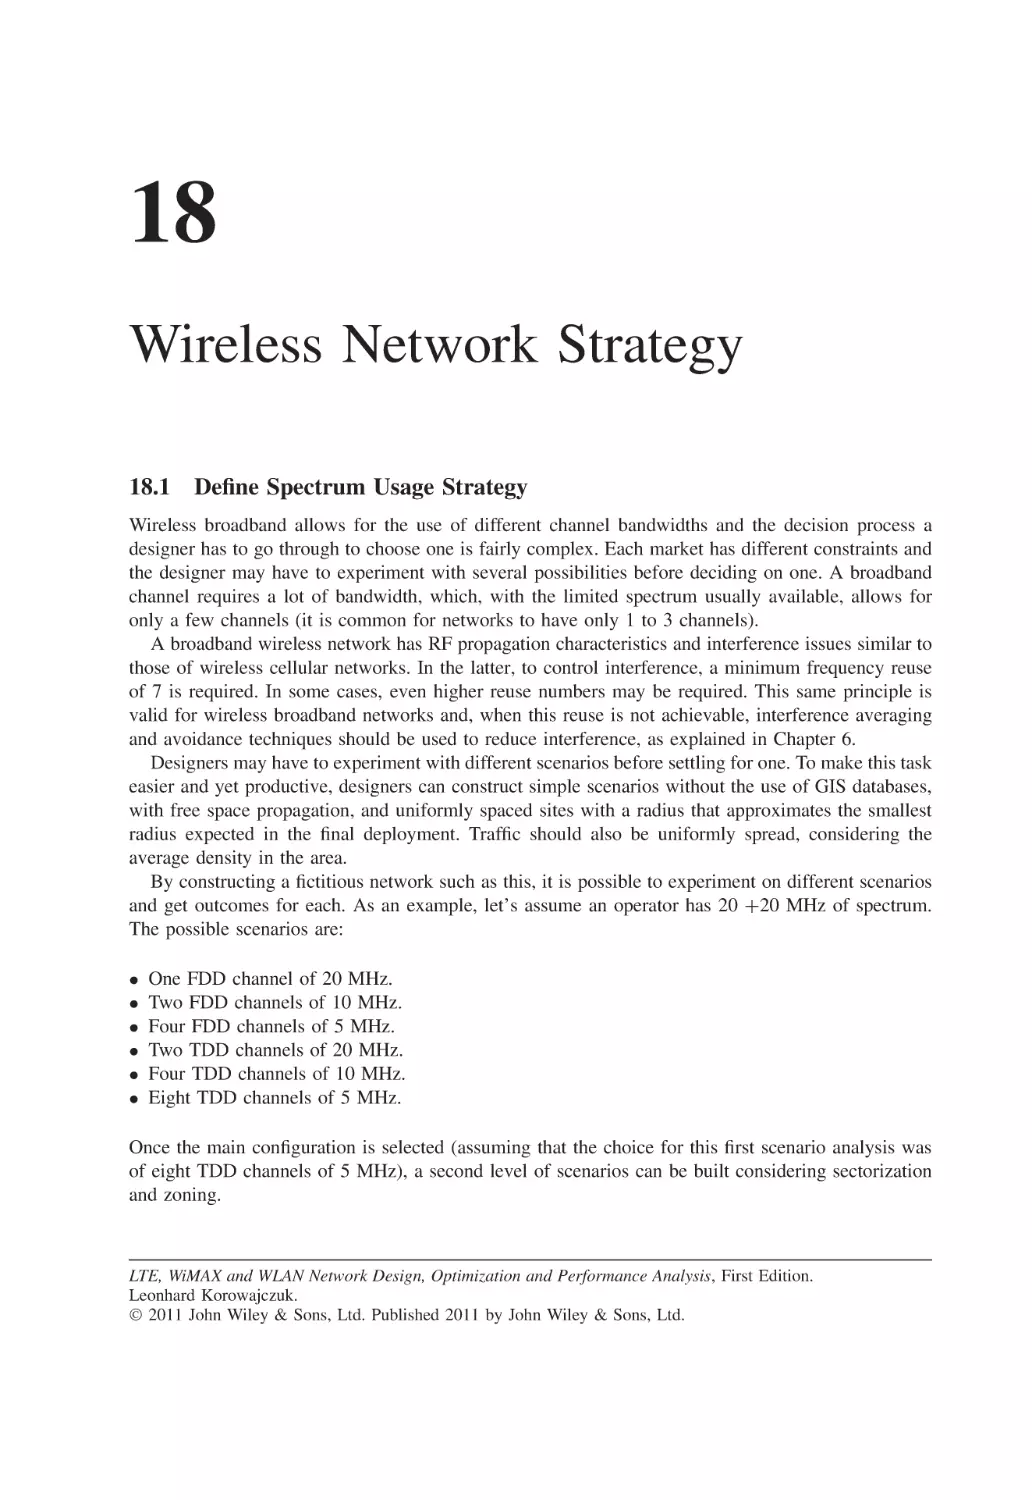 18 Wireless Network Strategy
18.1 Define Spectrum Usage Strategy